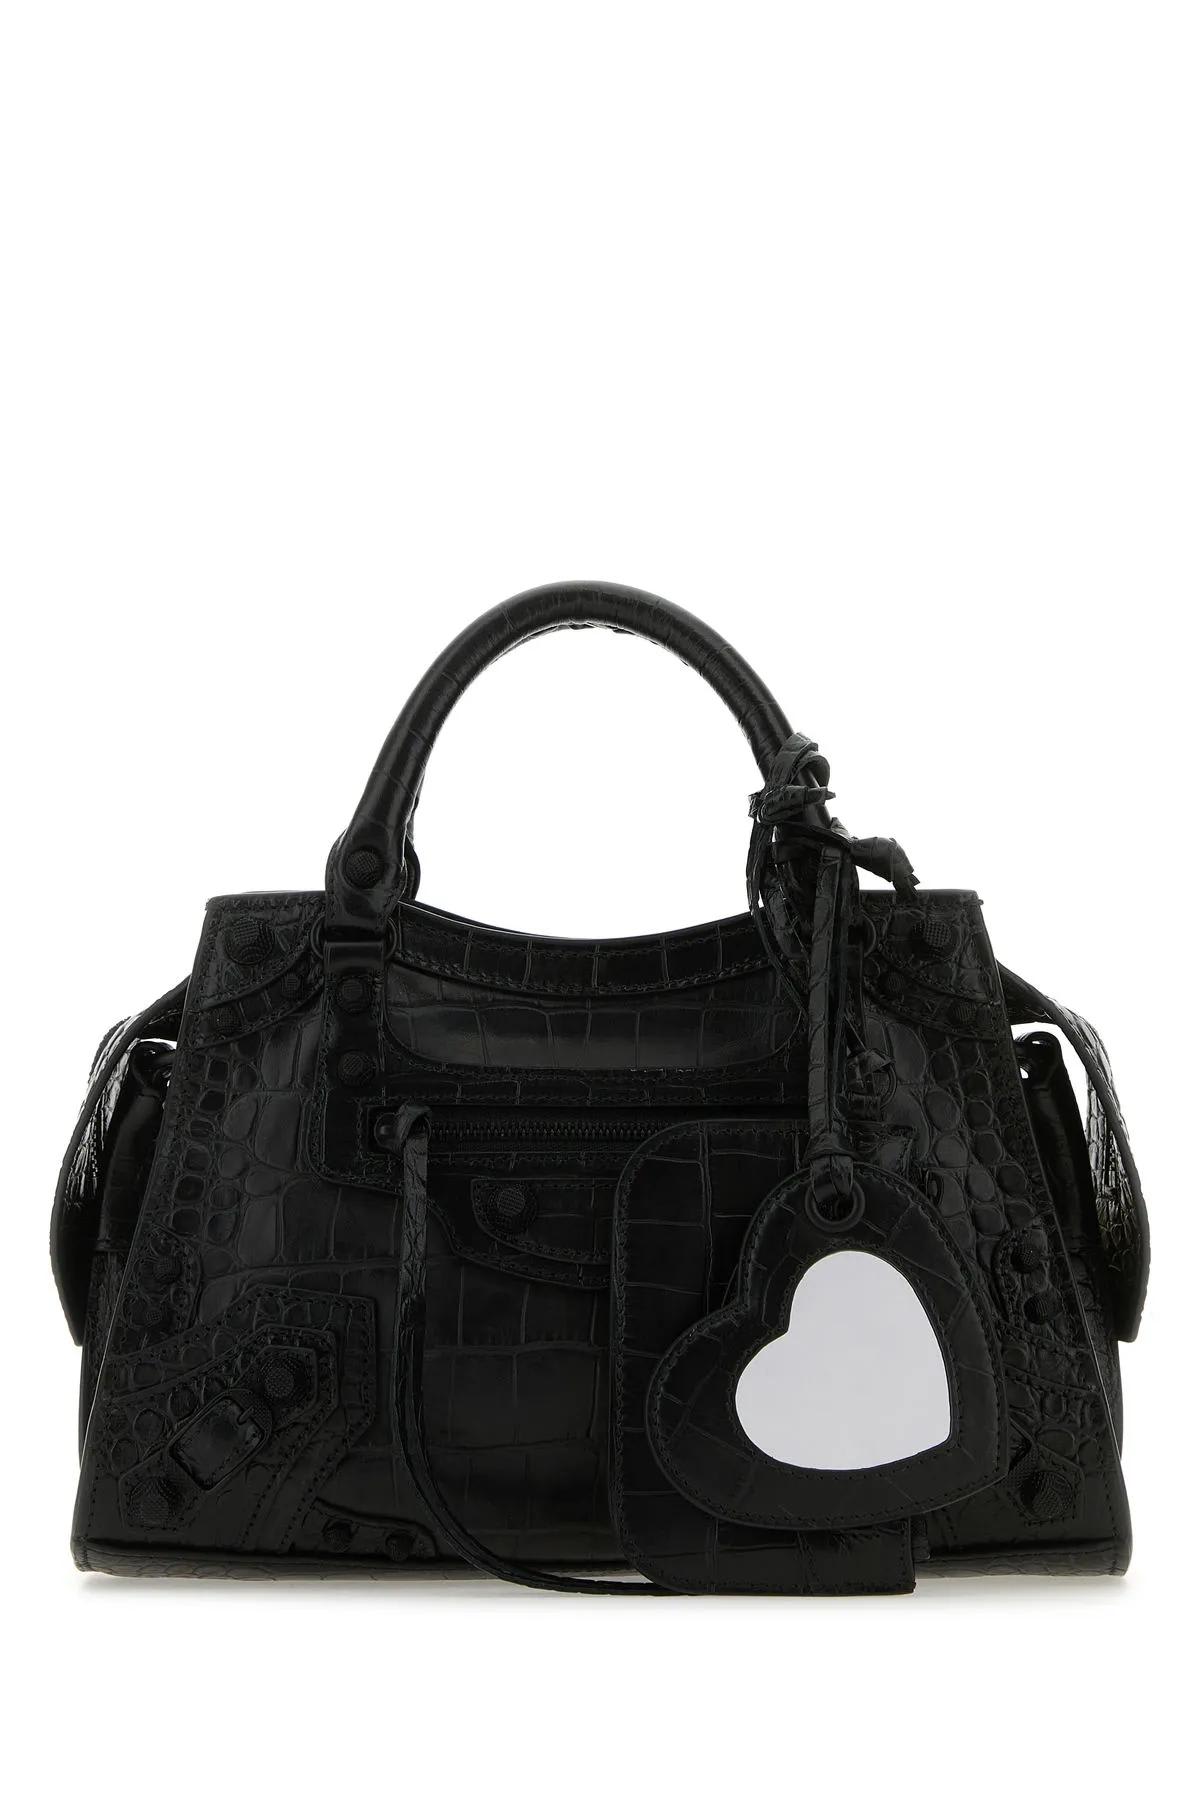 Balenciaga Black Nappa Leather Neo Cagole Xs Handbag